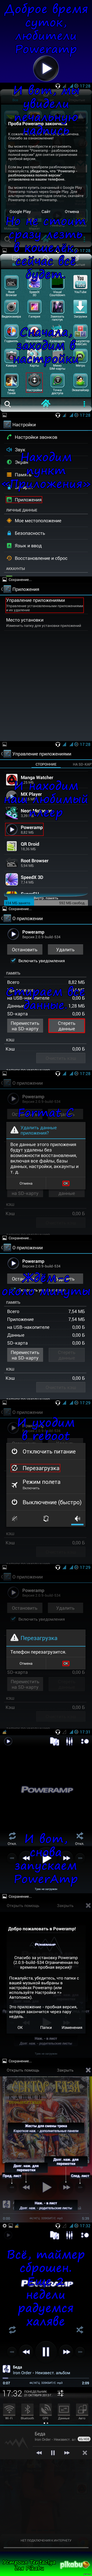     PowerAmp 